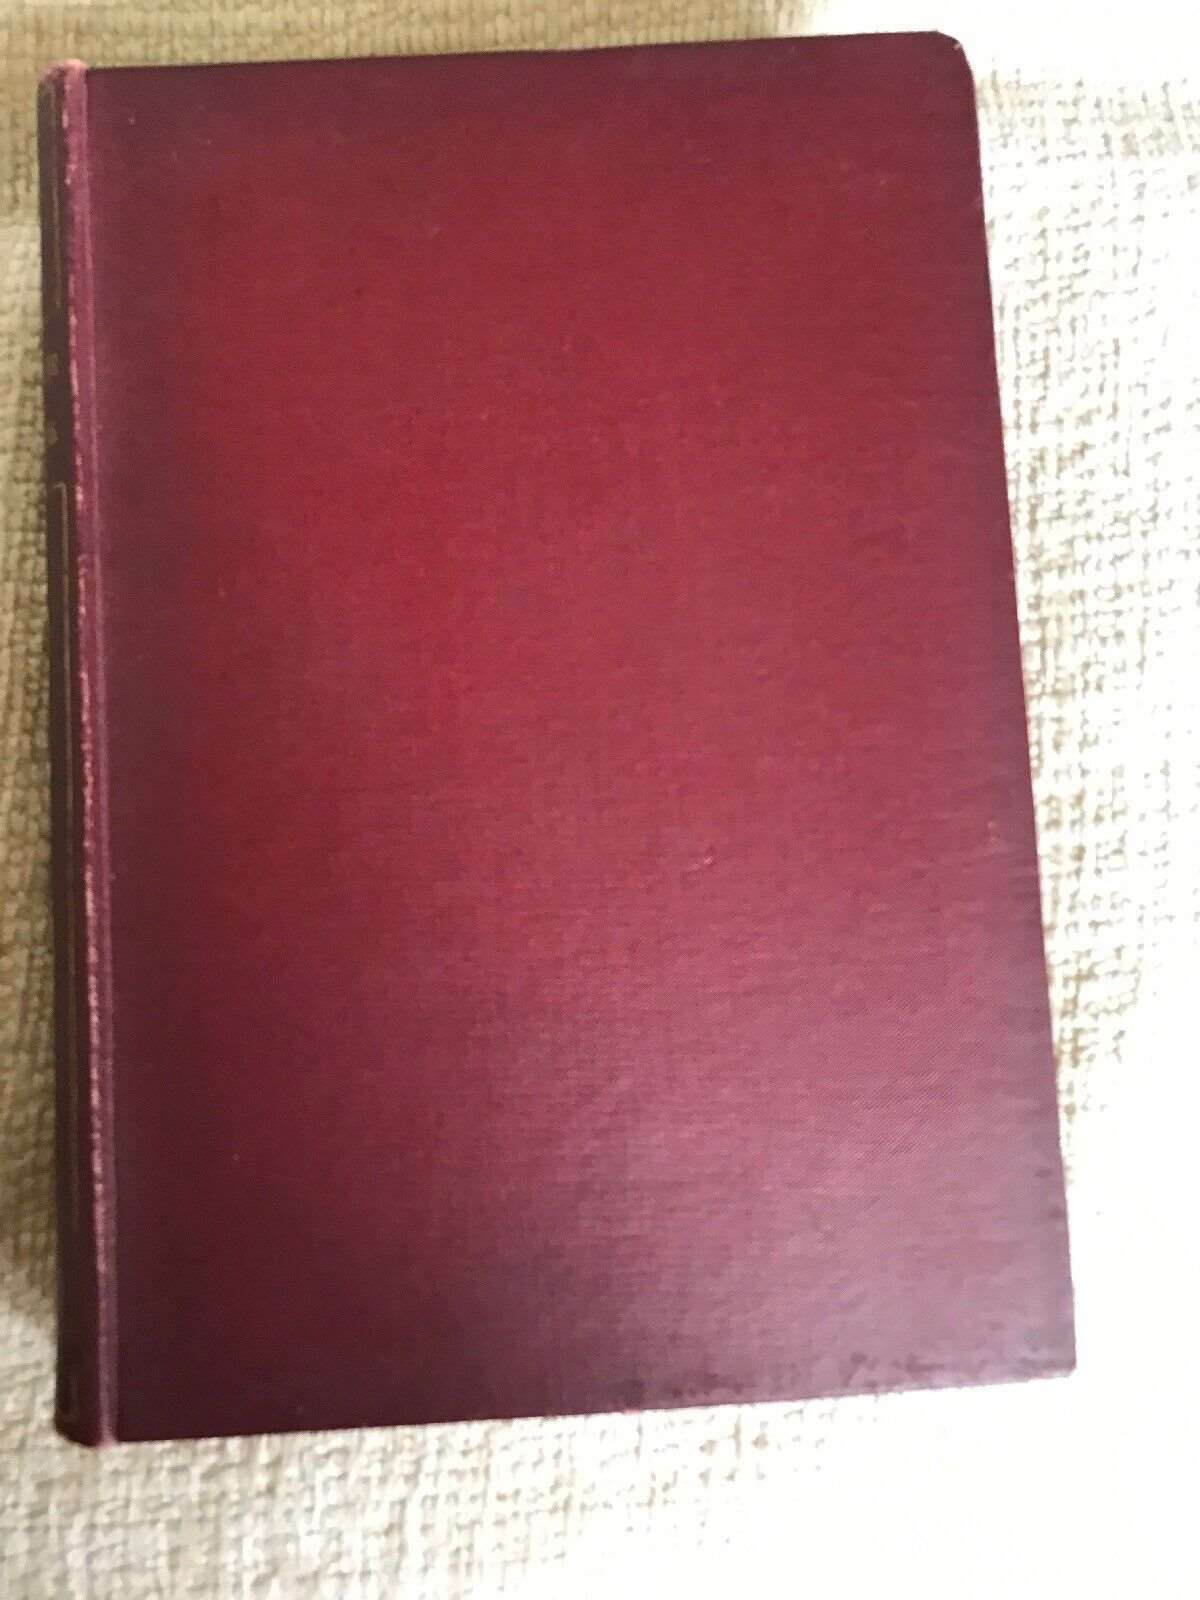 1887*1st* Life Of Adam Smith - R. B. Haldane (Walter Scott) Honeyburn Books (UK)